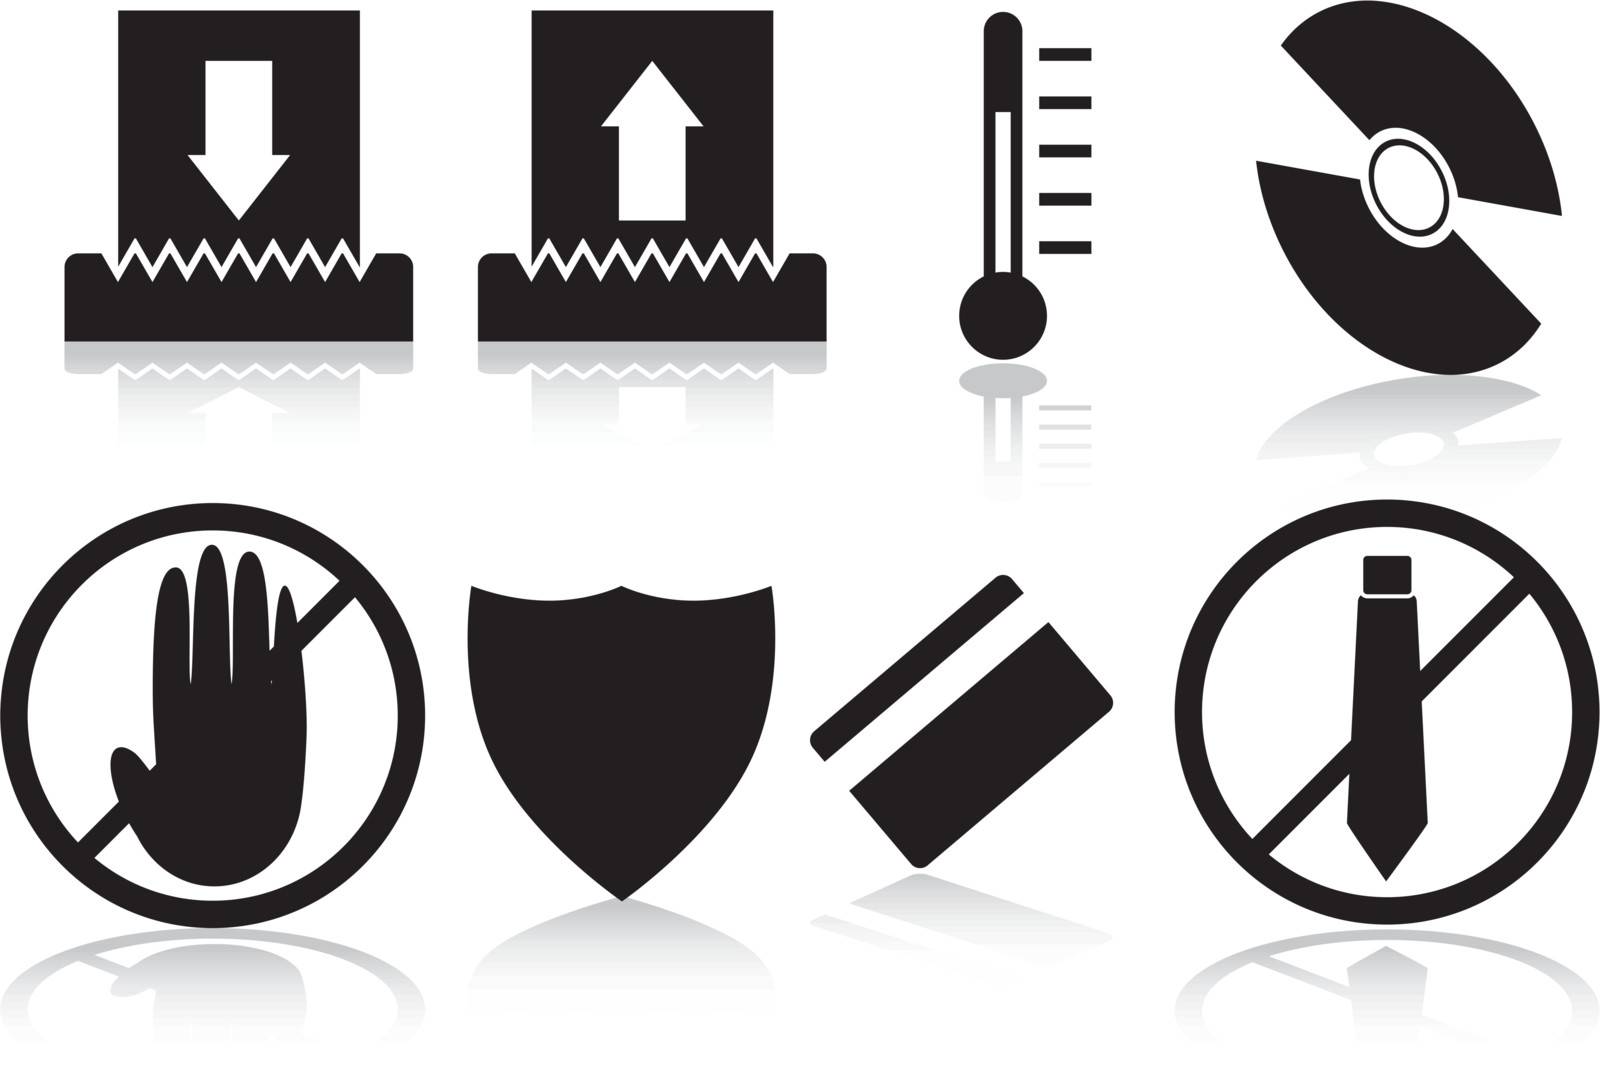 A set of paper shredder icons.